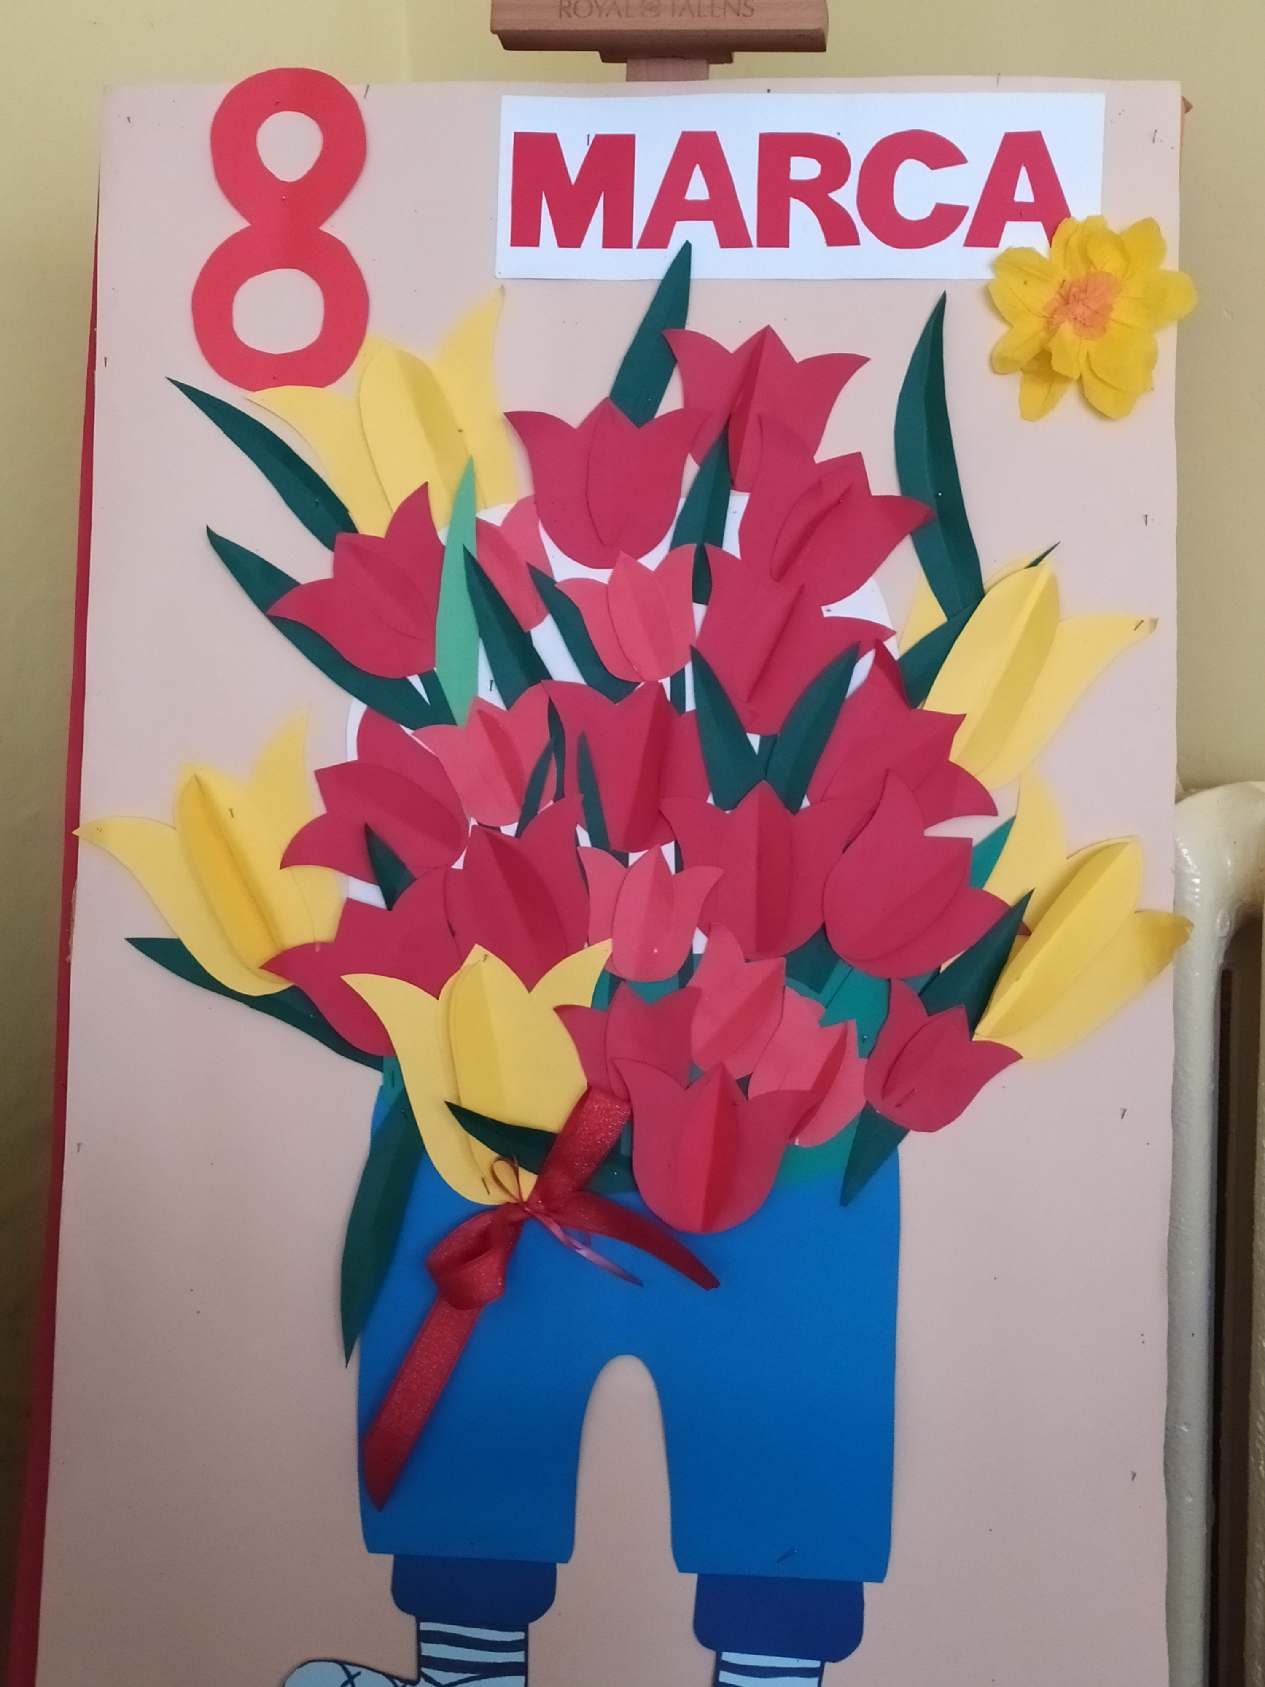 Plakat z tulipanami